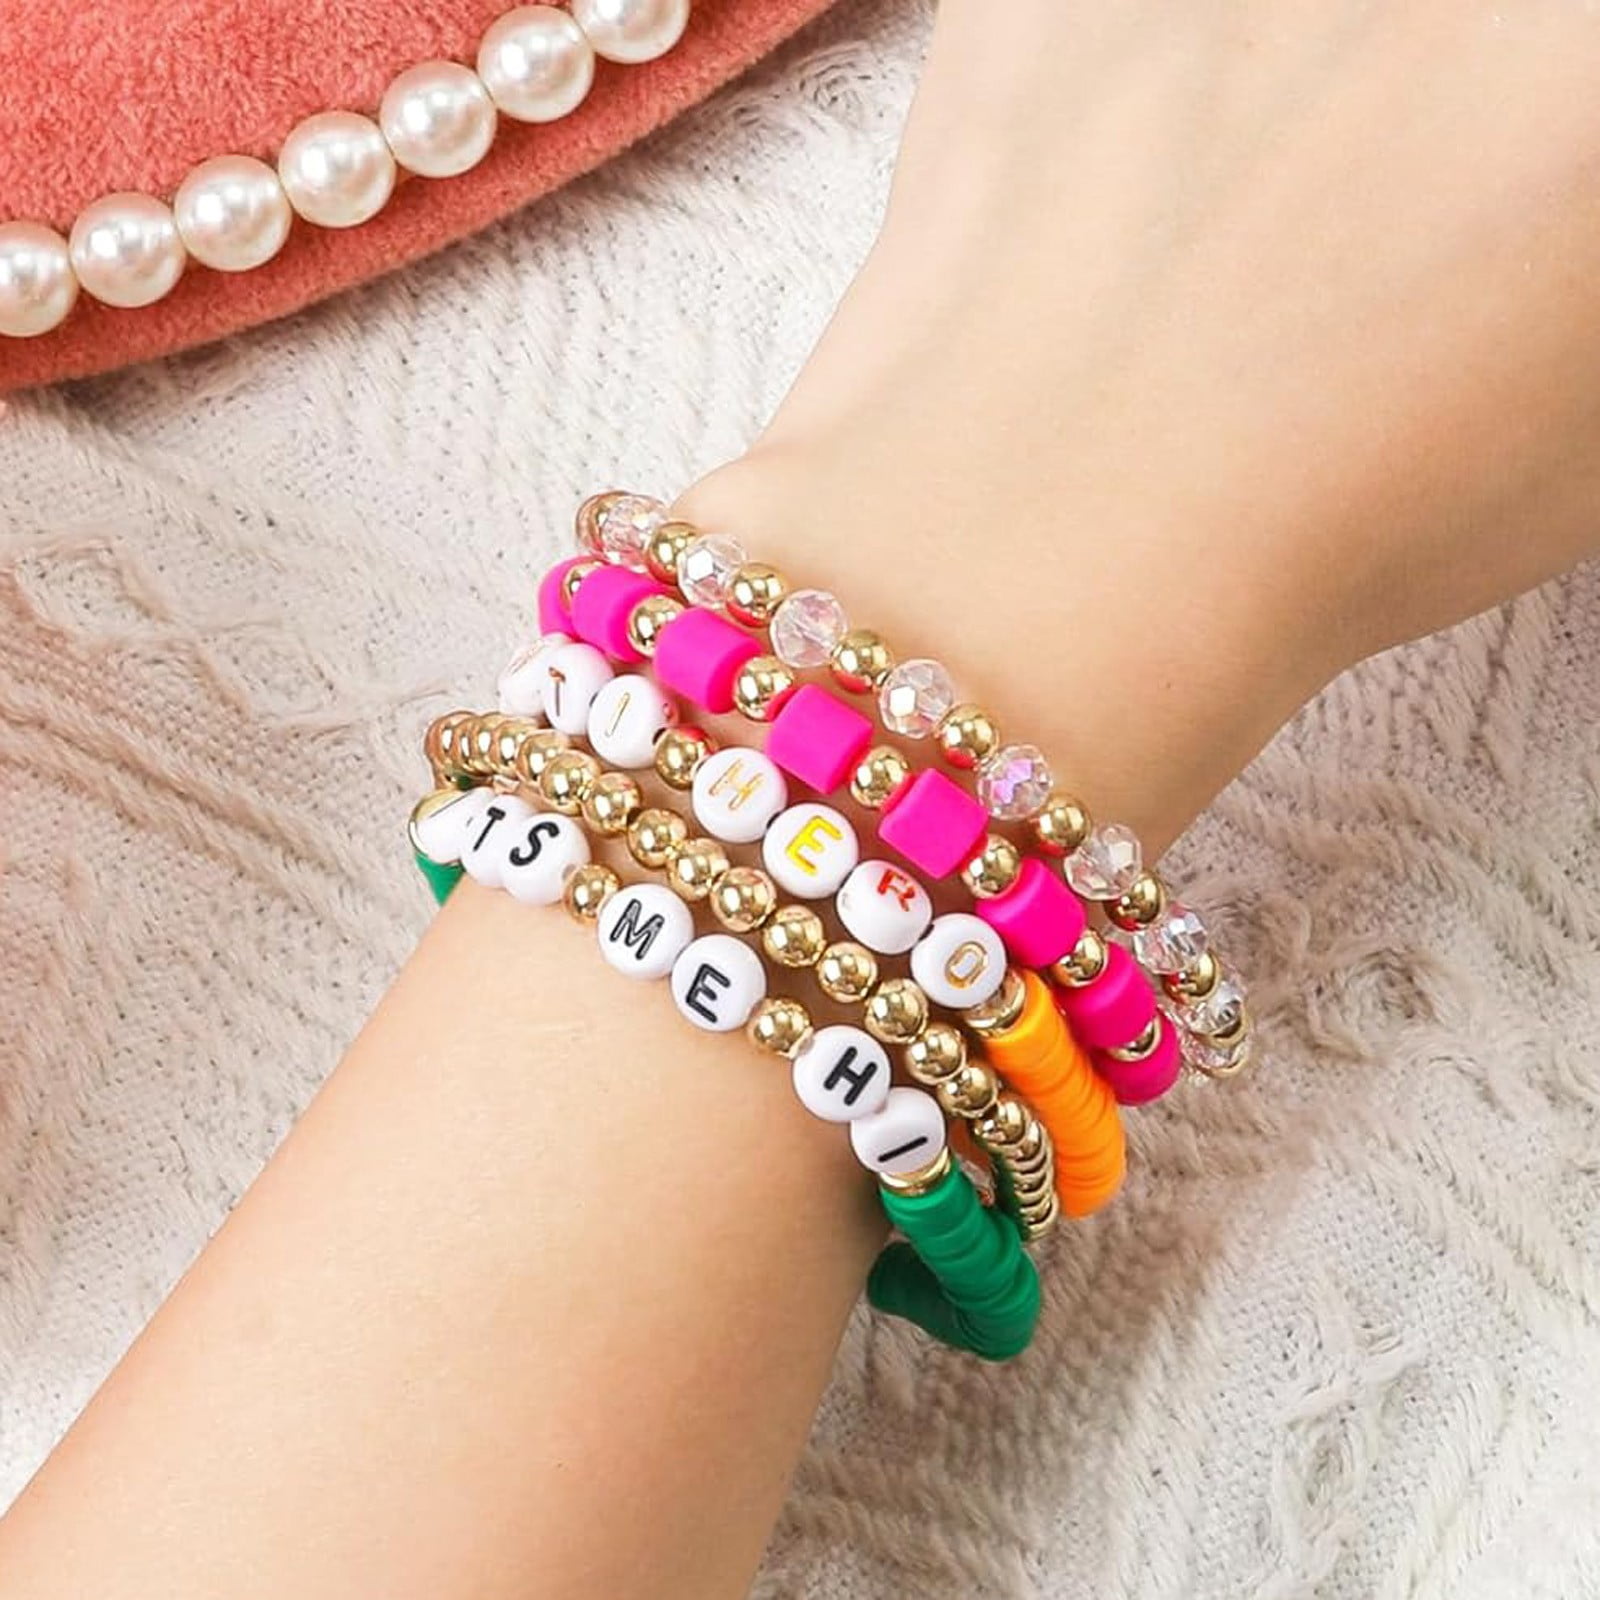 Swiftie friendship bracelet set – The Bead Shop